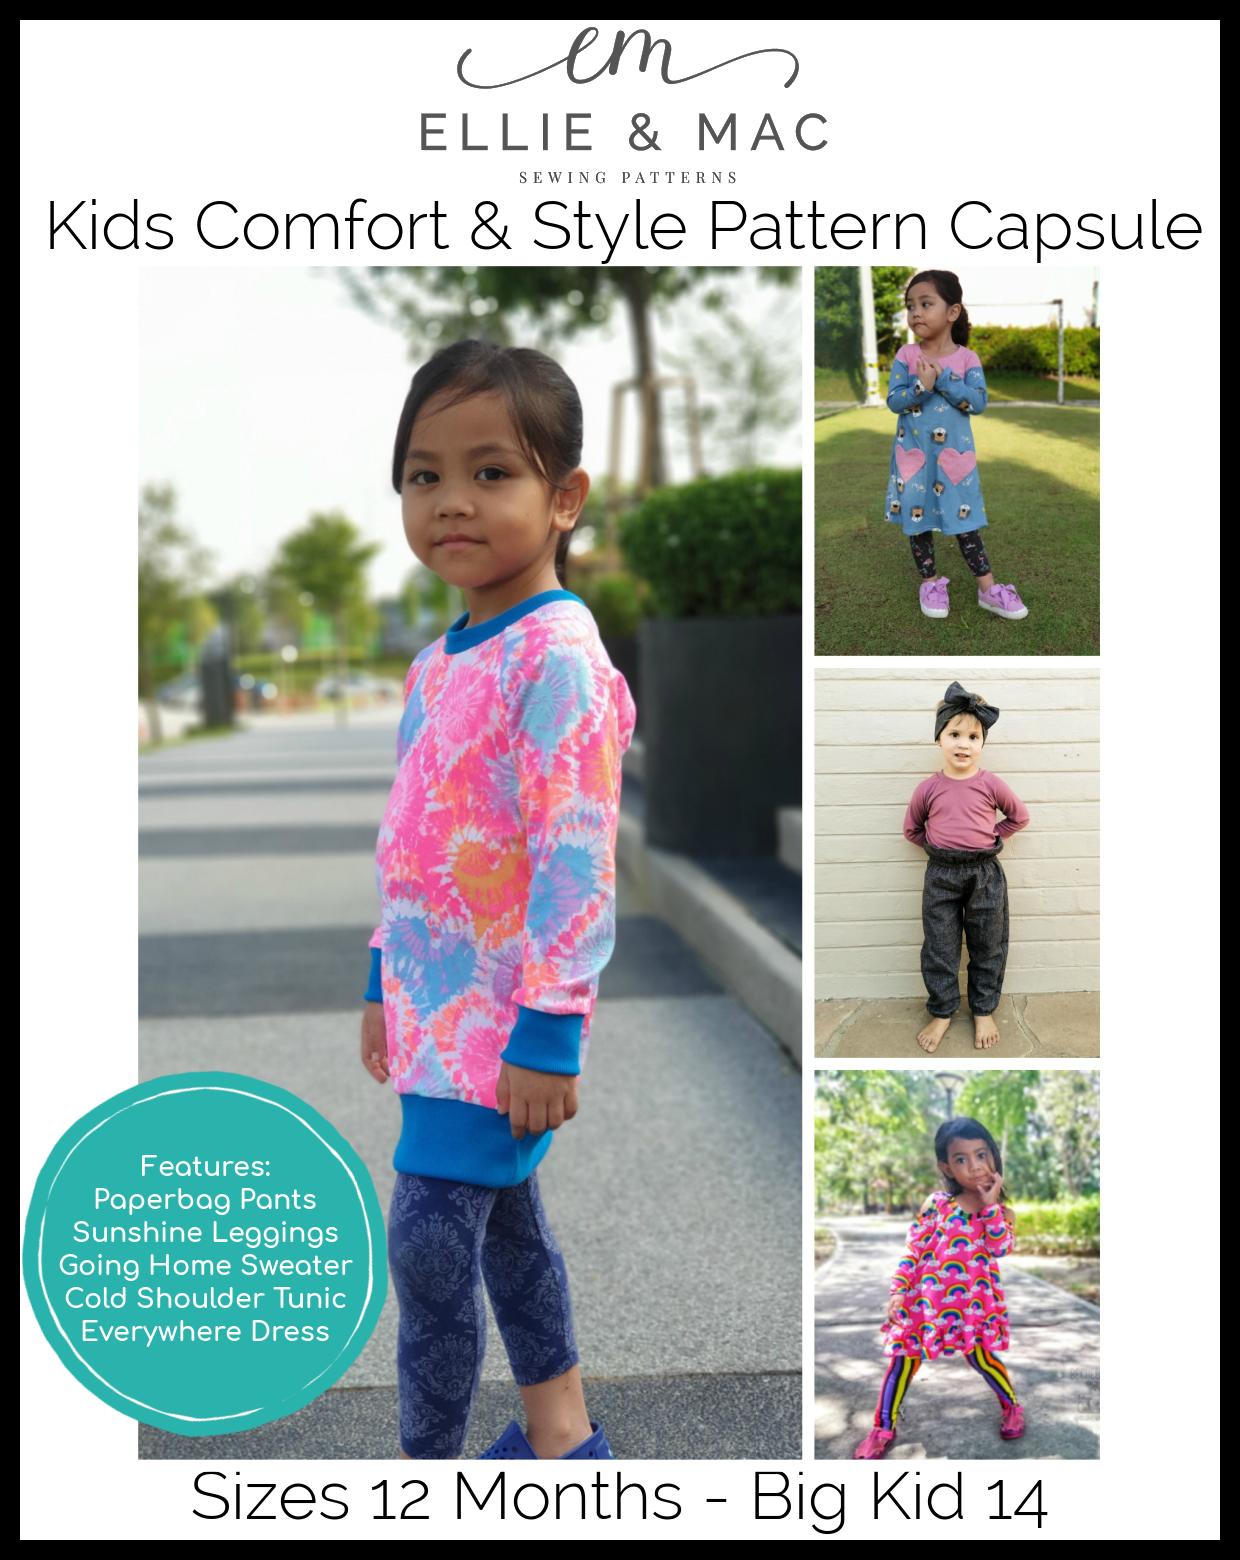 Kid's Comfort & Style Capsule